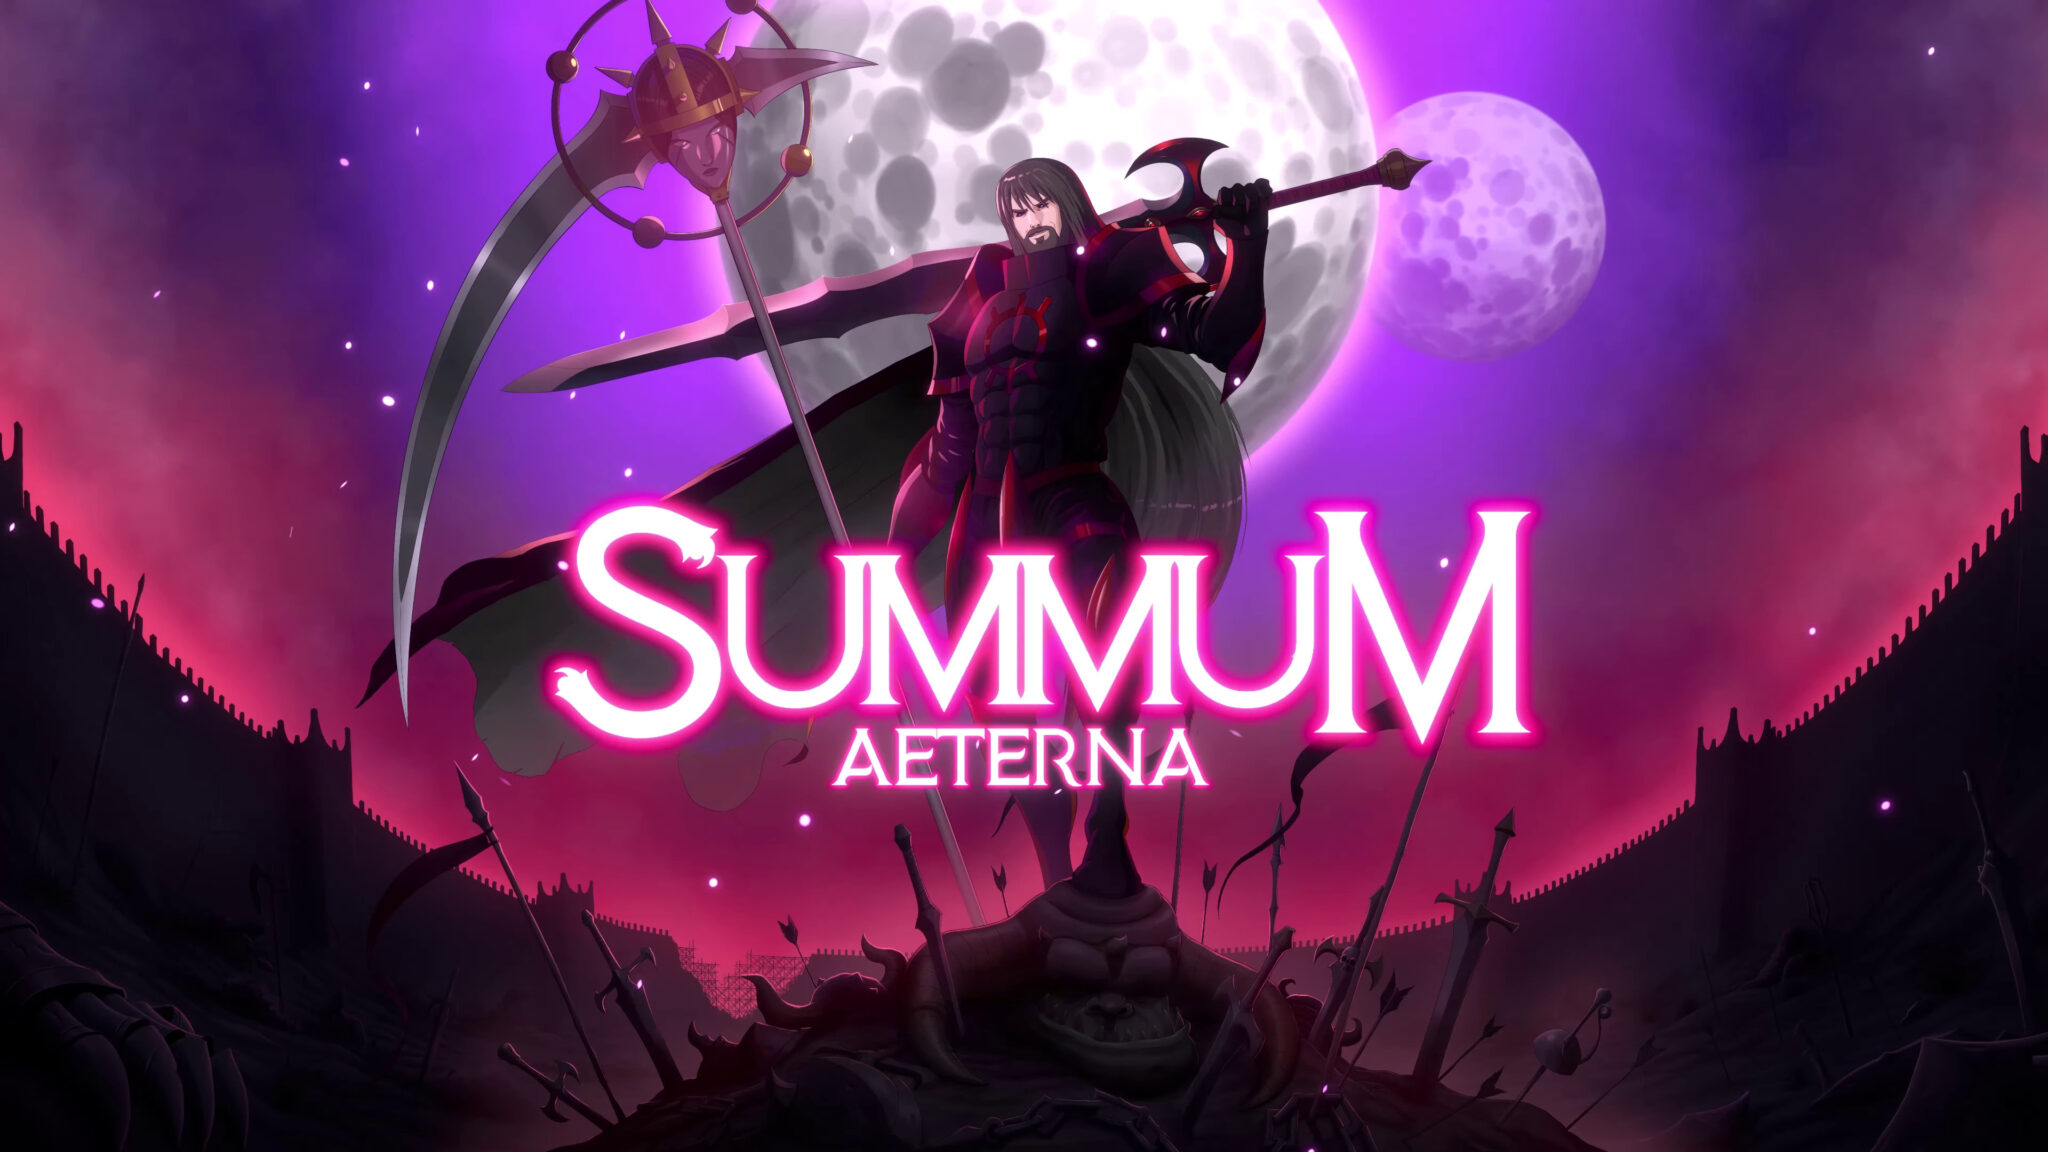 Summum Aeterna for mac instal free